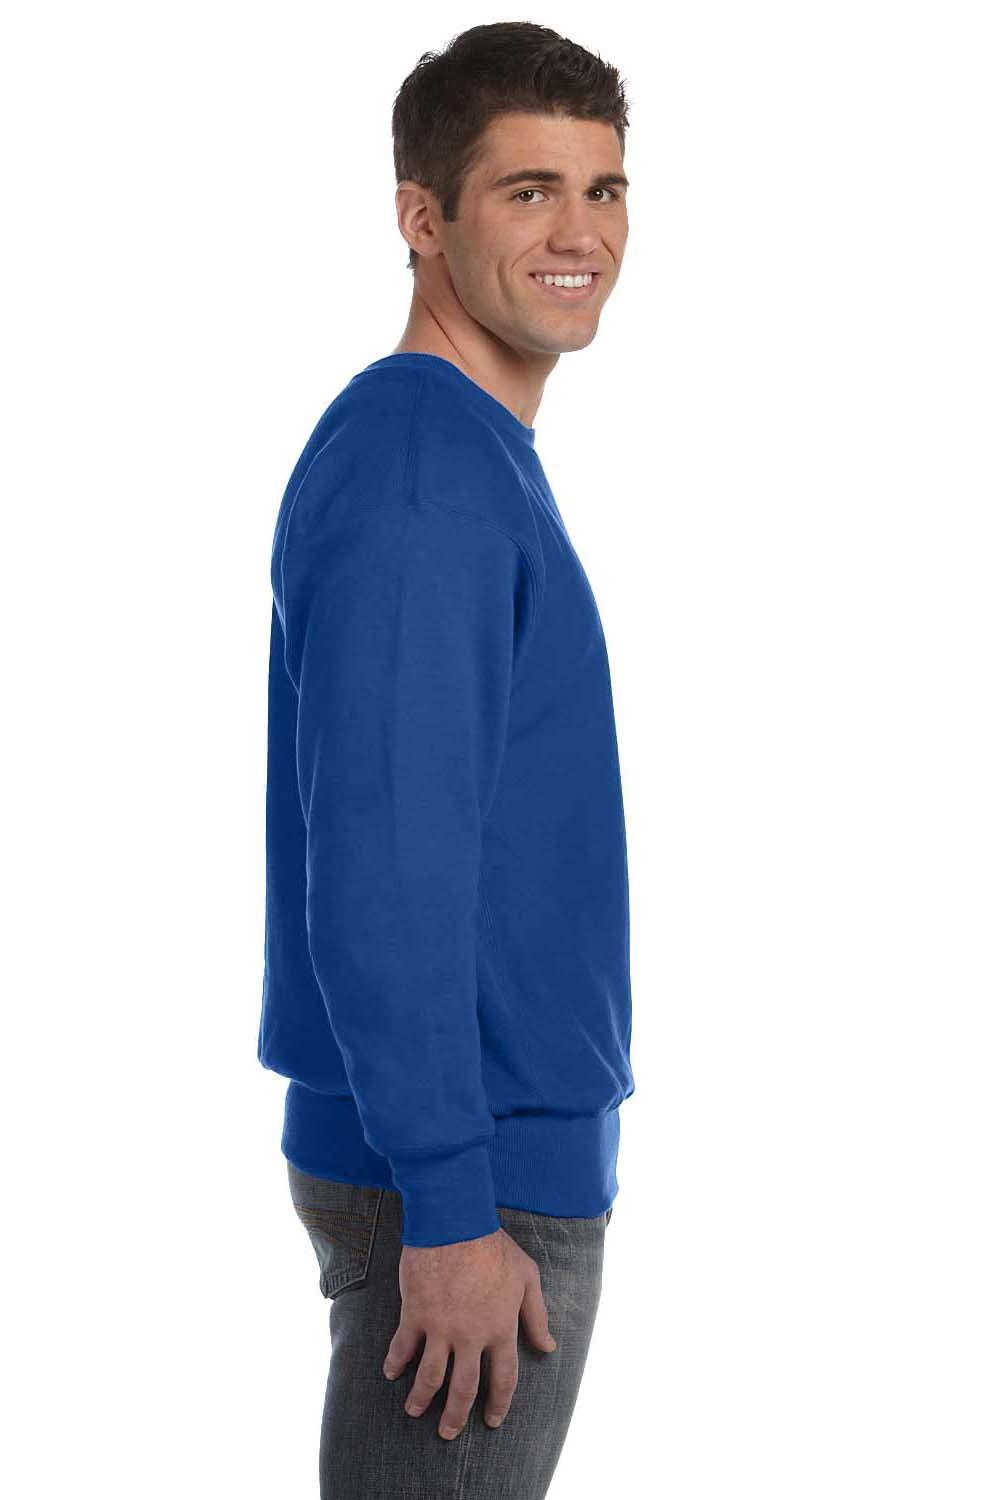 Athletic Champion — Blue S149/S1049 Royal Sweatshirt Crewneck Mens